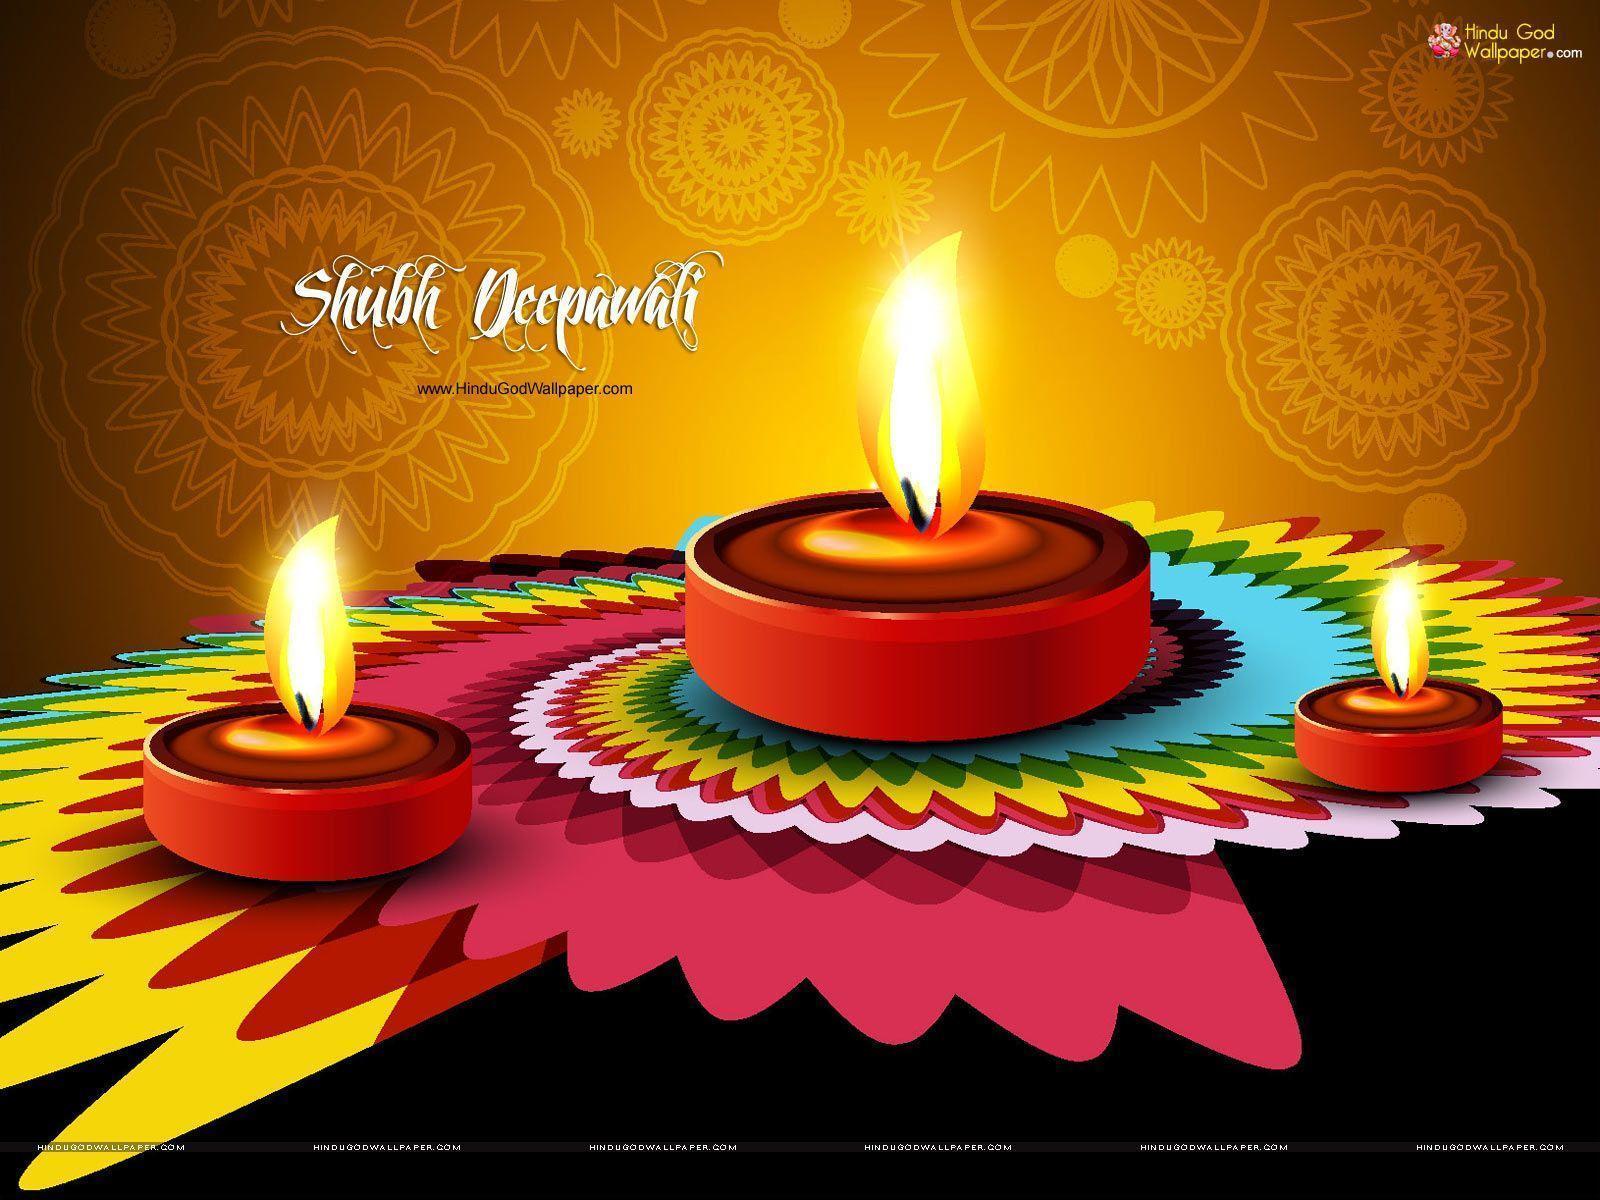 Diwali Wallpaper 2016: Download Free & Latest HD Diwali Wallpaper